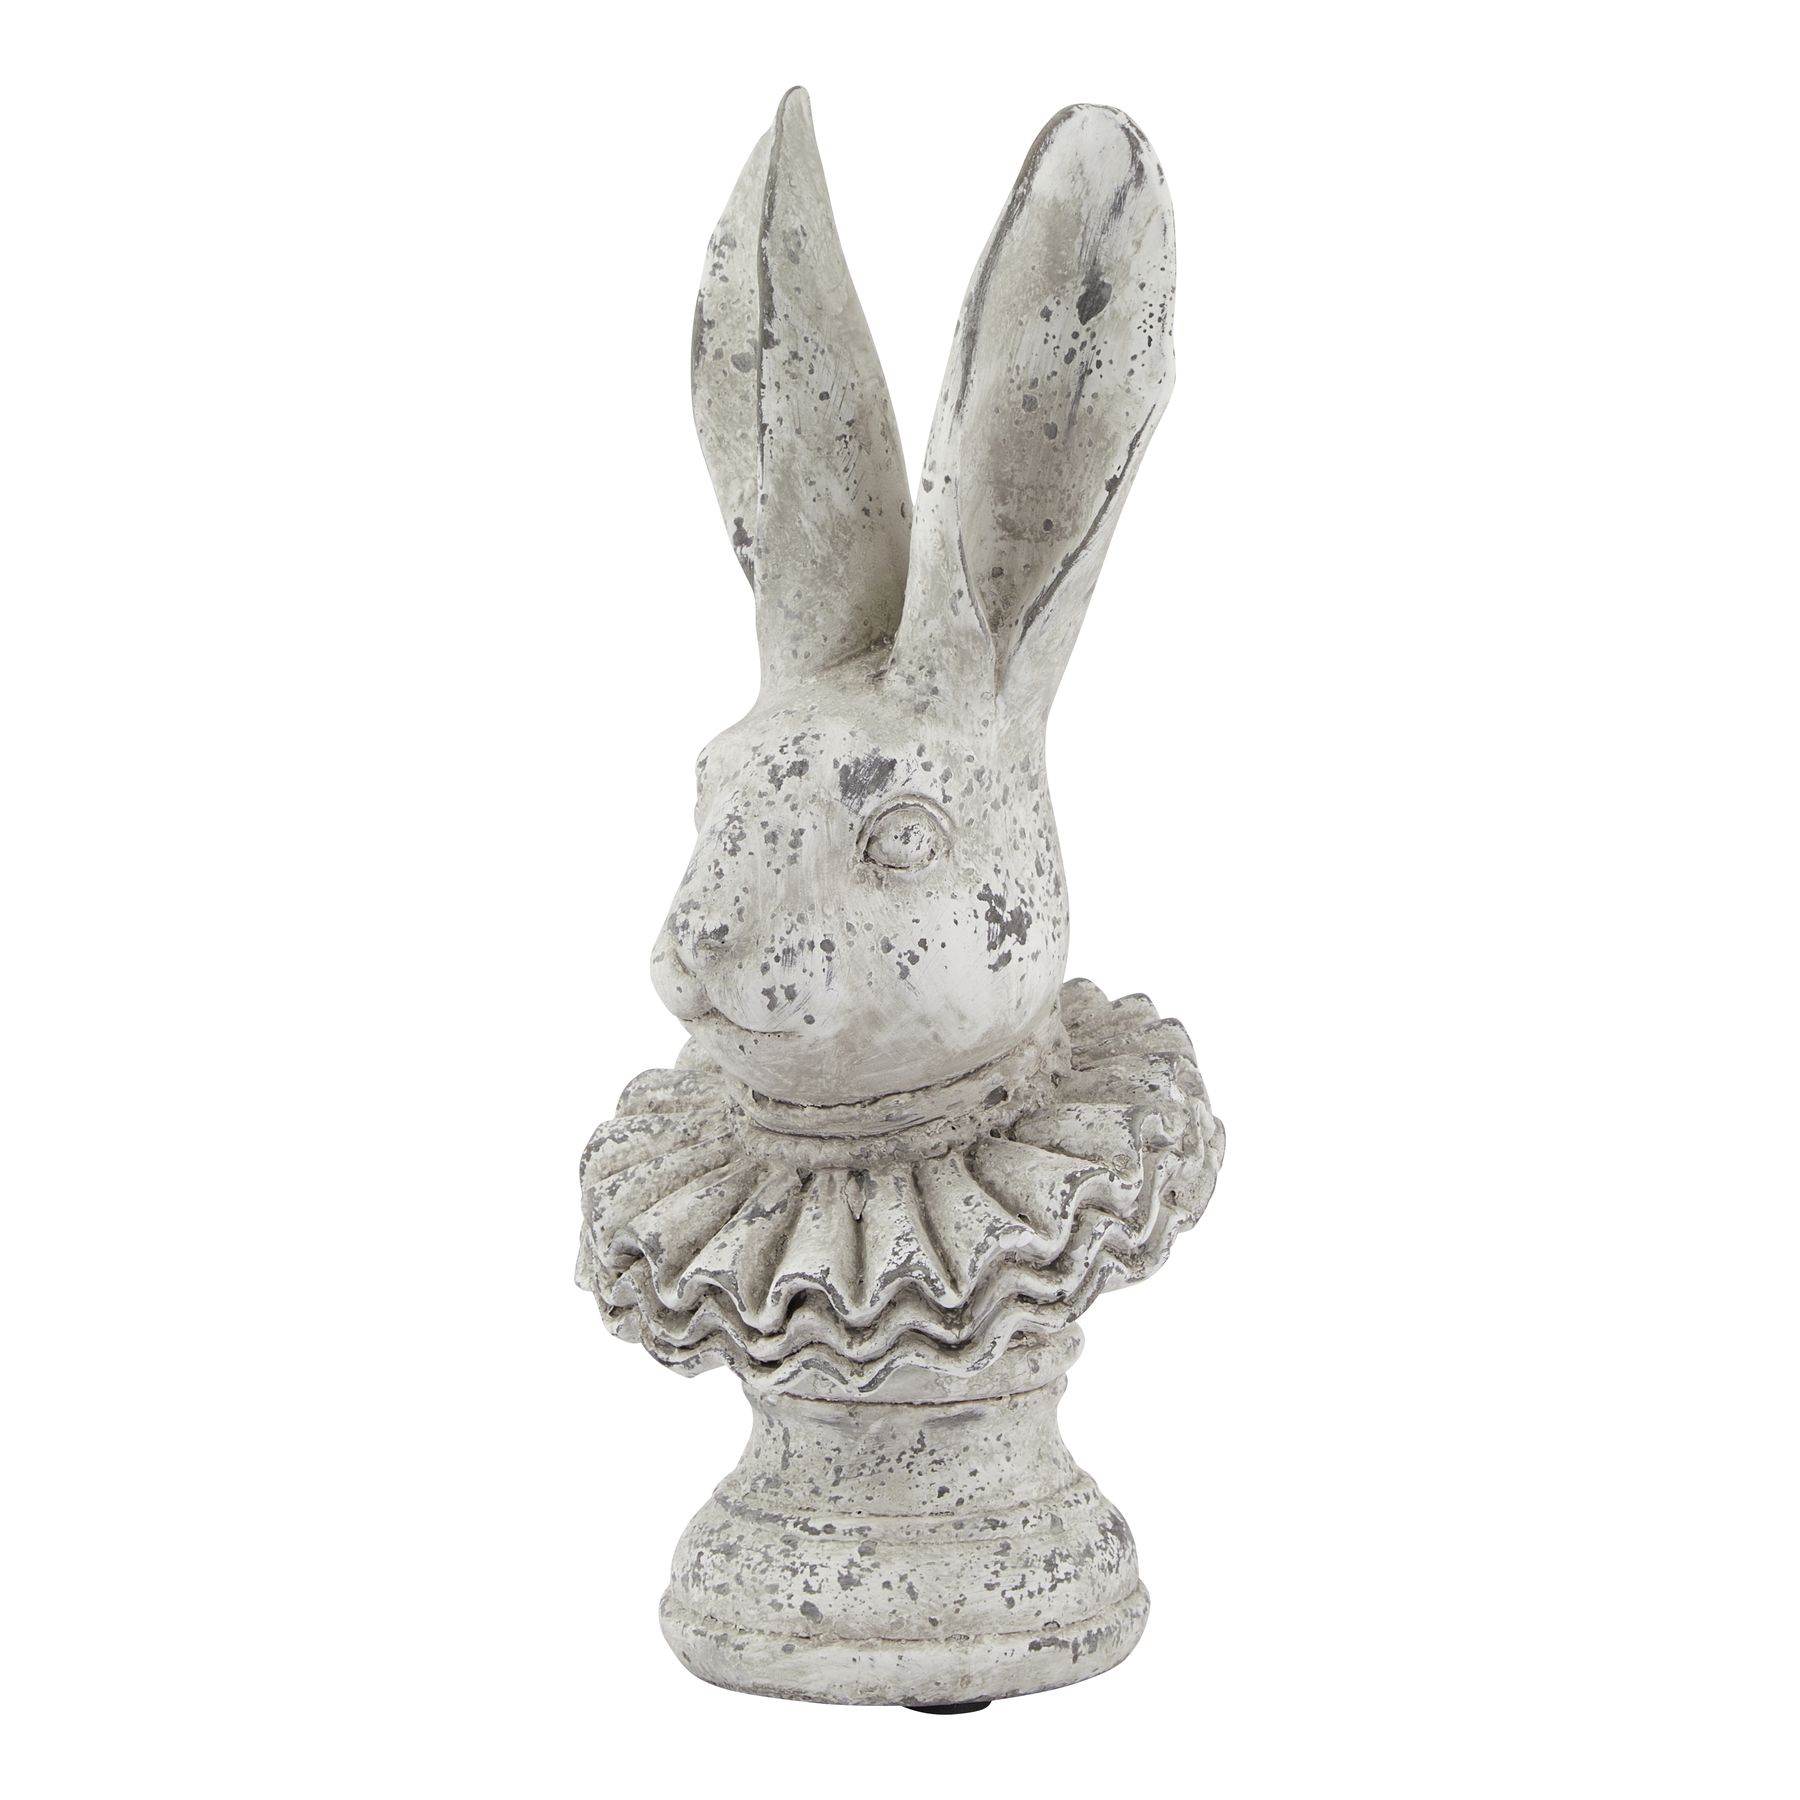 Stone Effect Ruffle Hare Ornament - Image 1